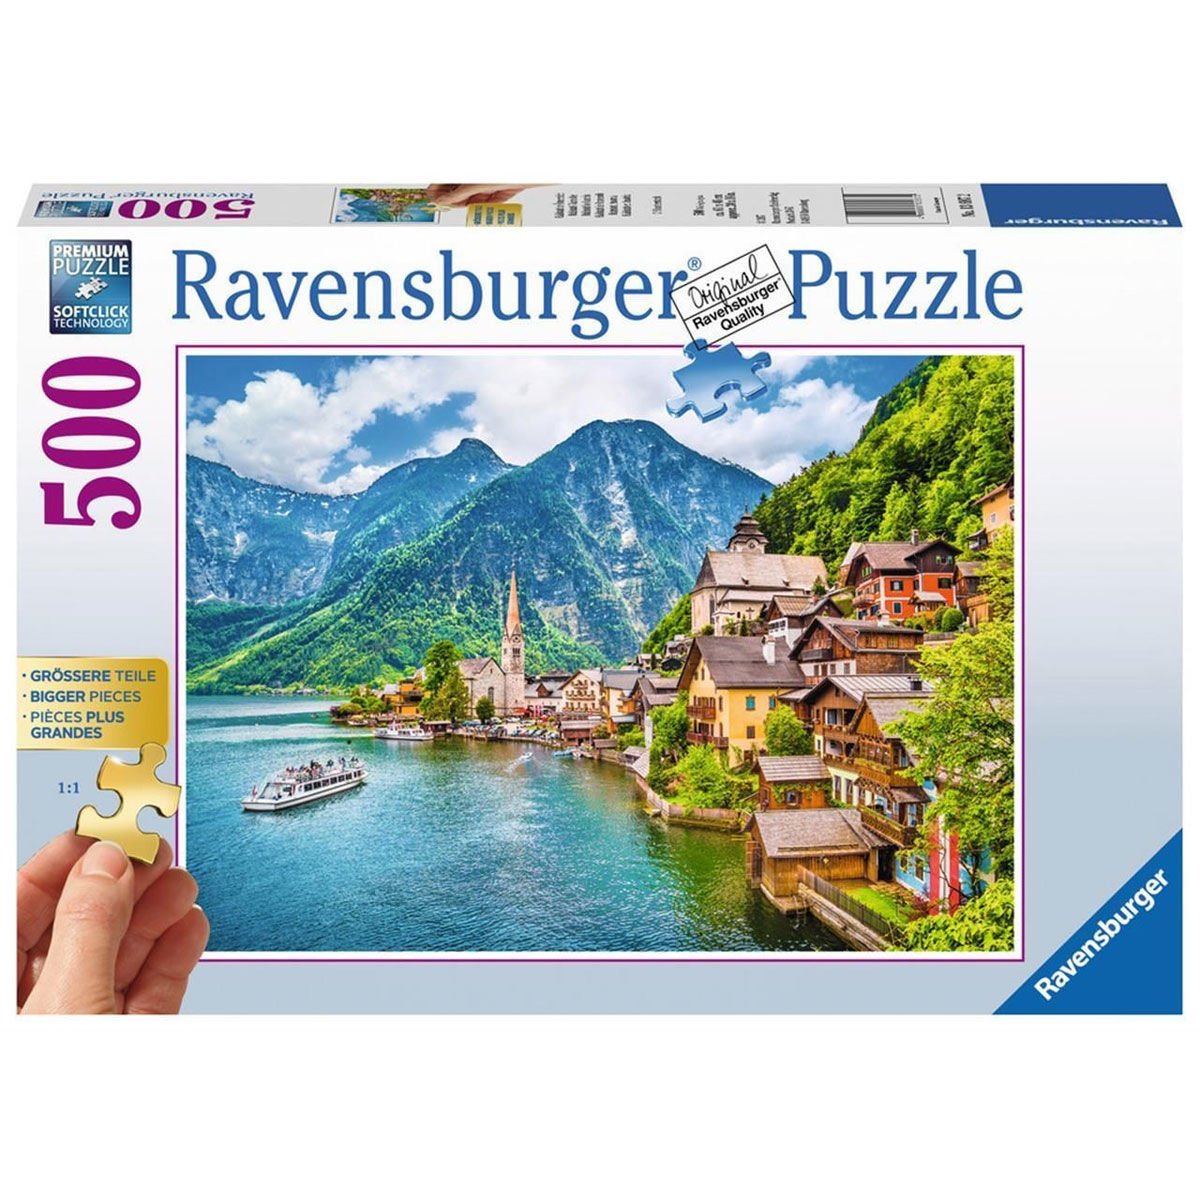 136872 Ravensburger Renkli Hattstatt 500 Parça Puzzle